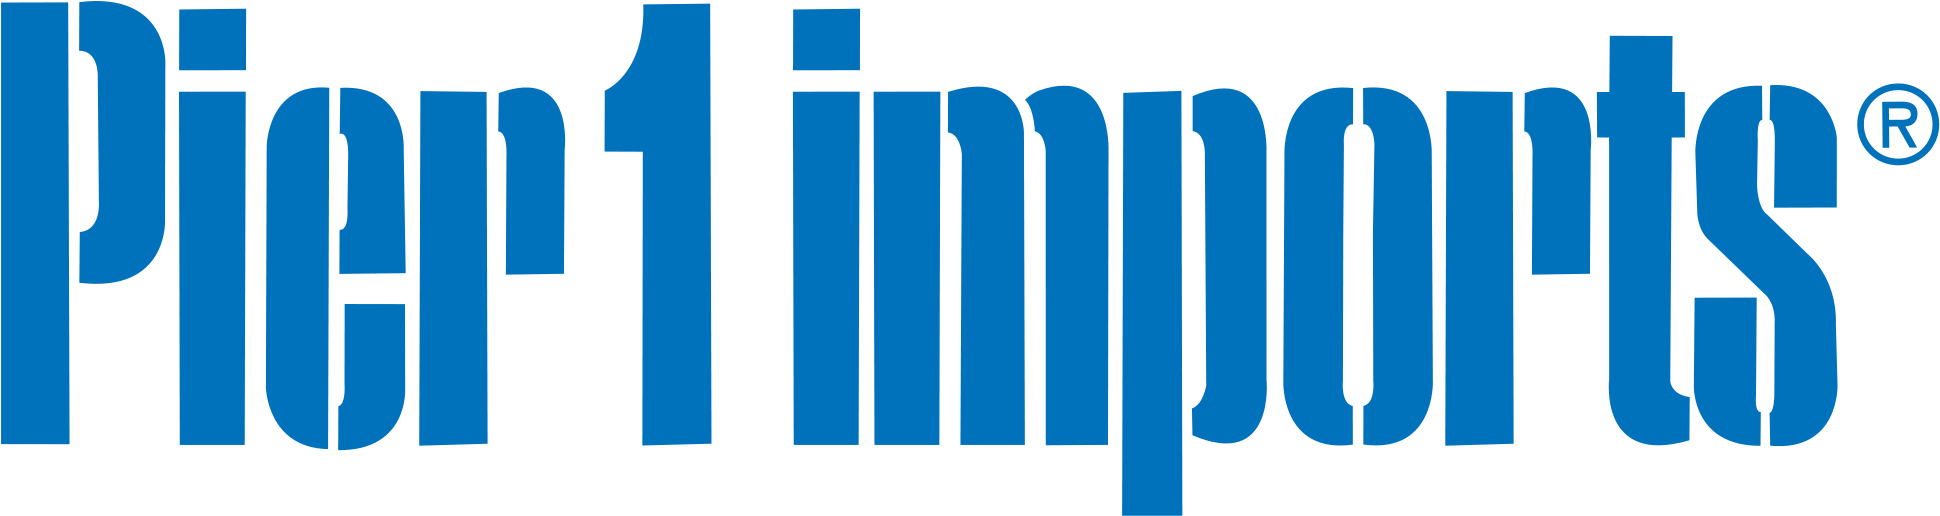 Pier 1 Imports Logo - Pier 1 Imports Logo (2000x580)